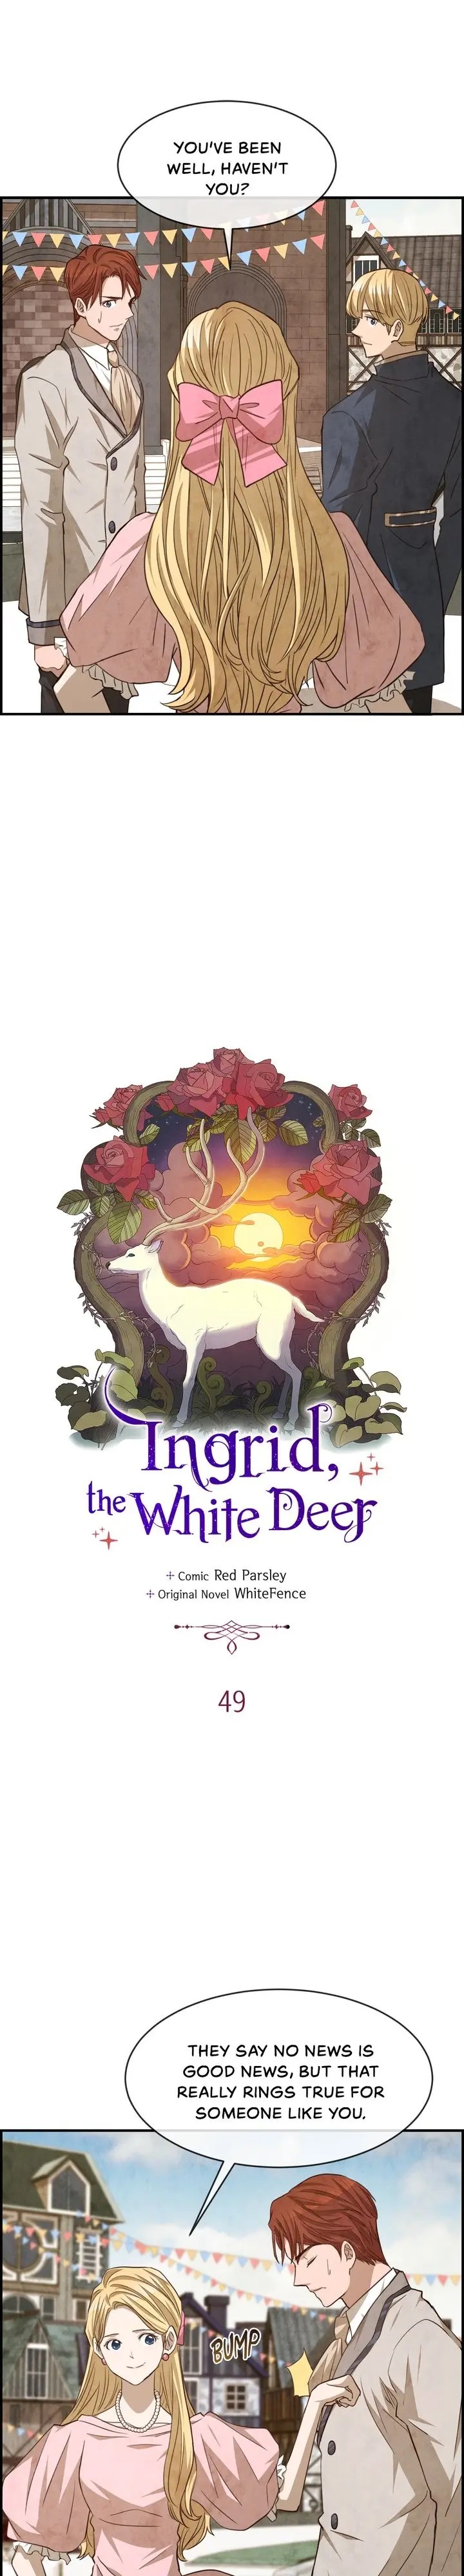 Ingrid, The White Deer - Page 3